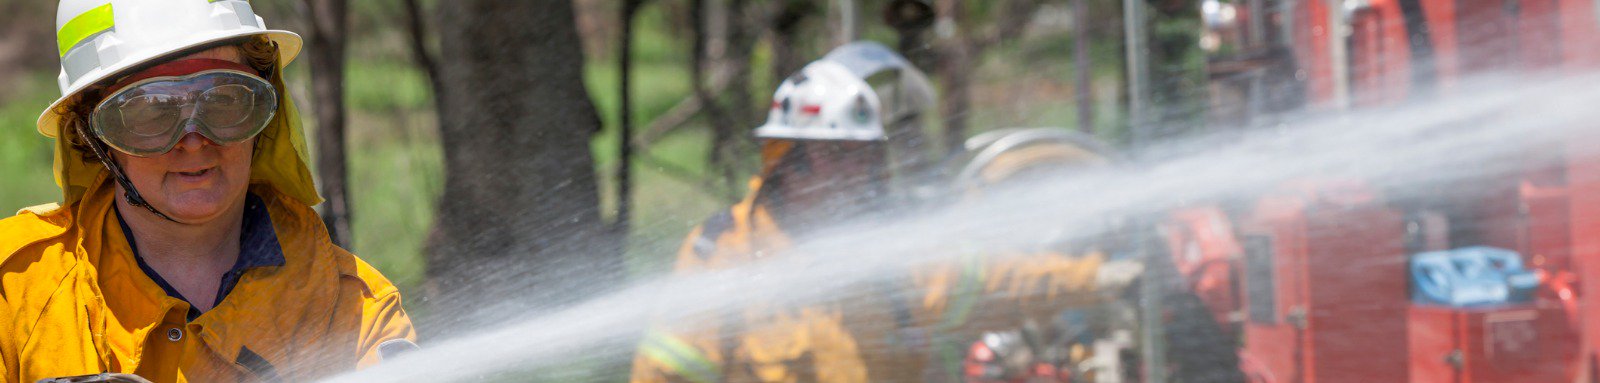 Firefighter in bush spraying hose next to truck